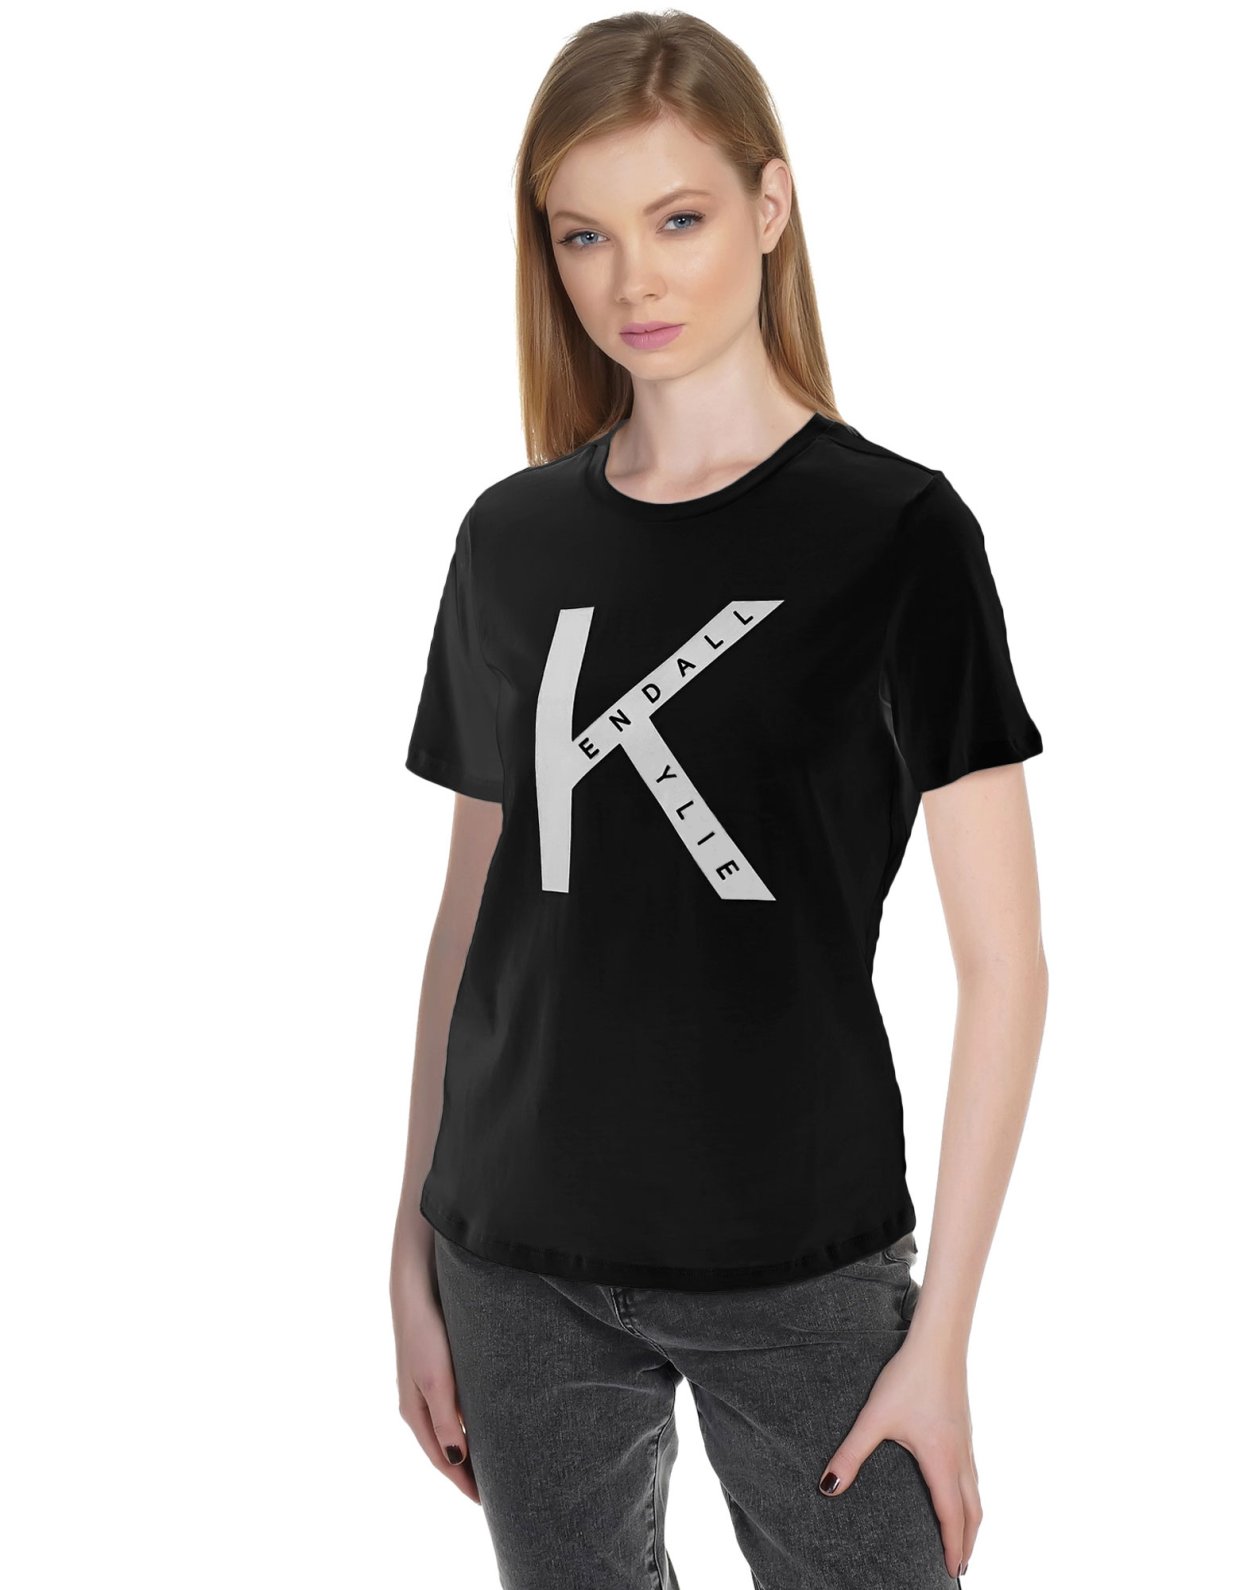 Kendall + Kylie Square logo t-shirt black